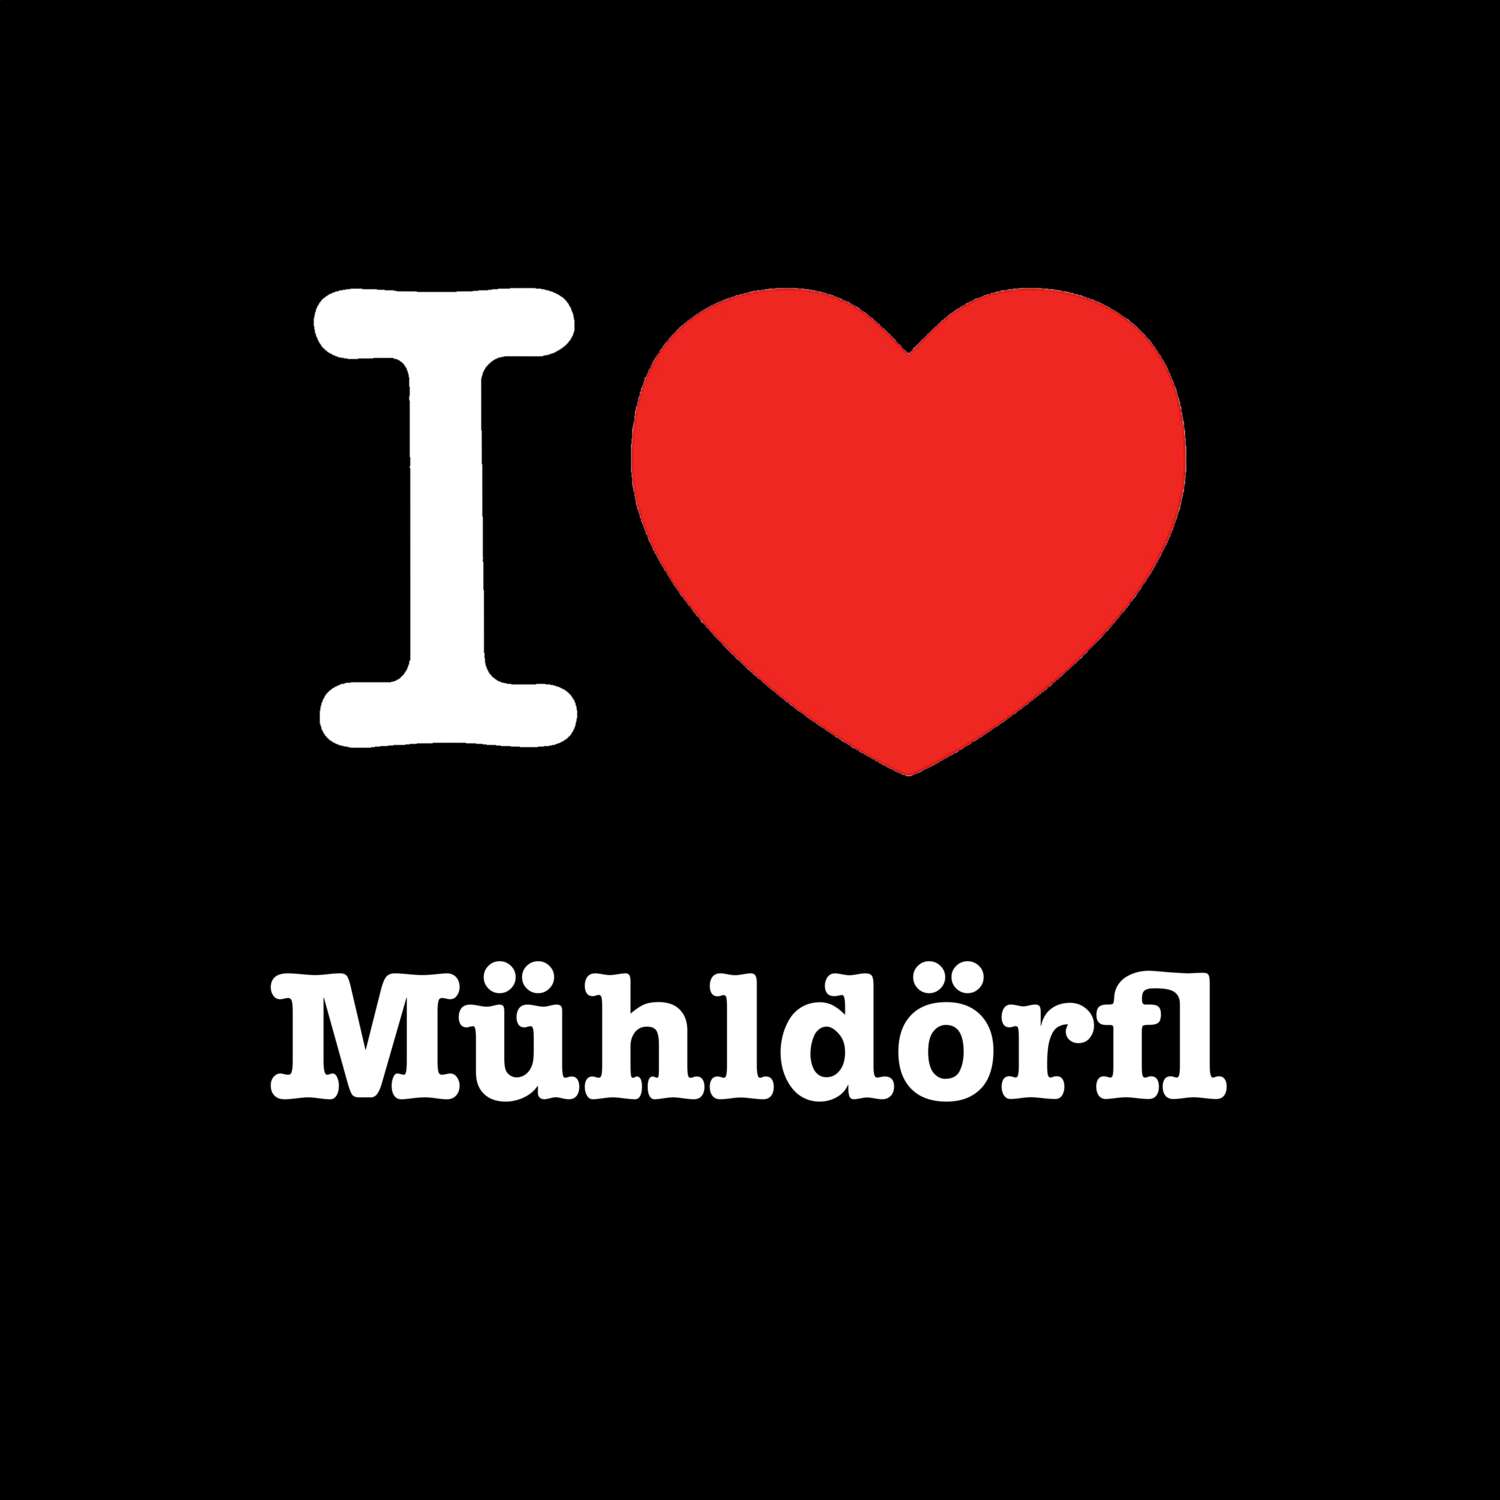 Mühldörfl T-Shirt »I love«